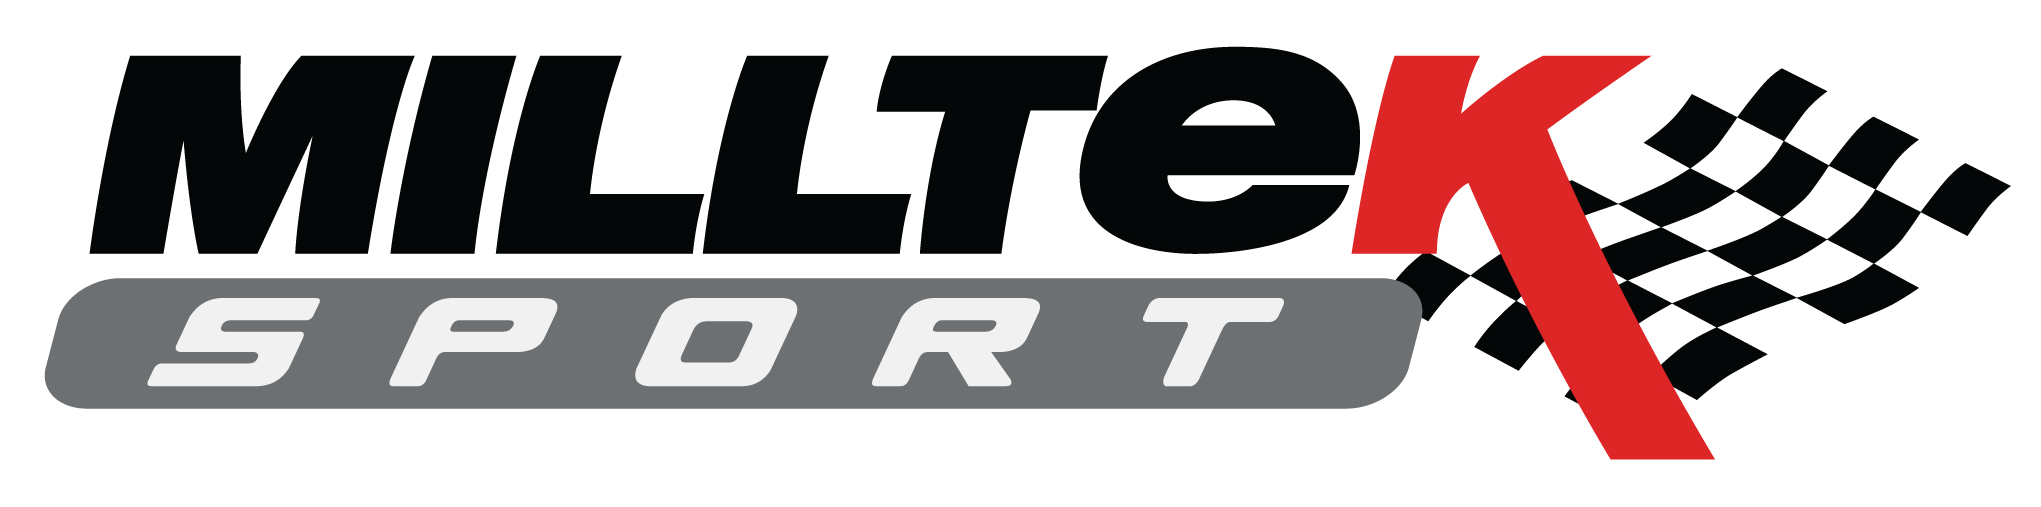 milltek.logo_.white_large